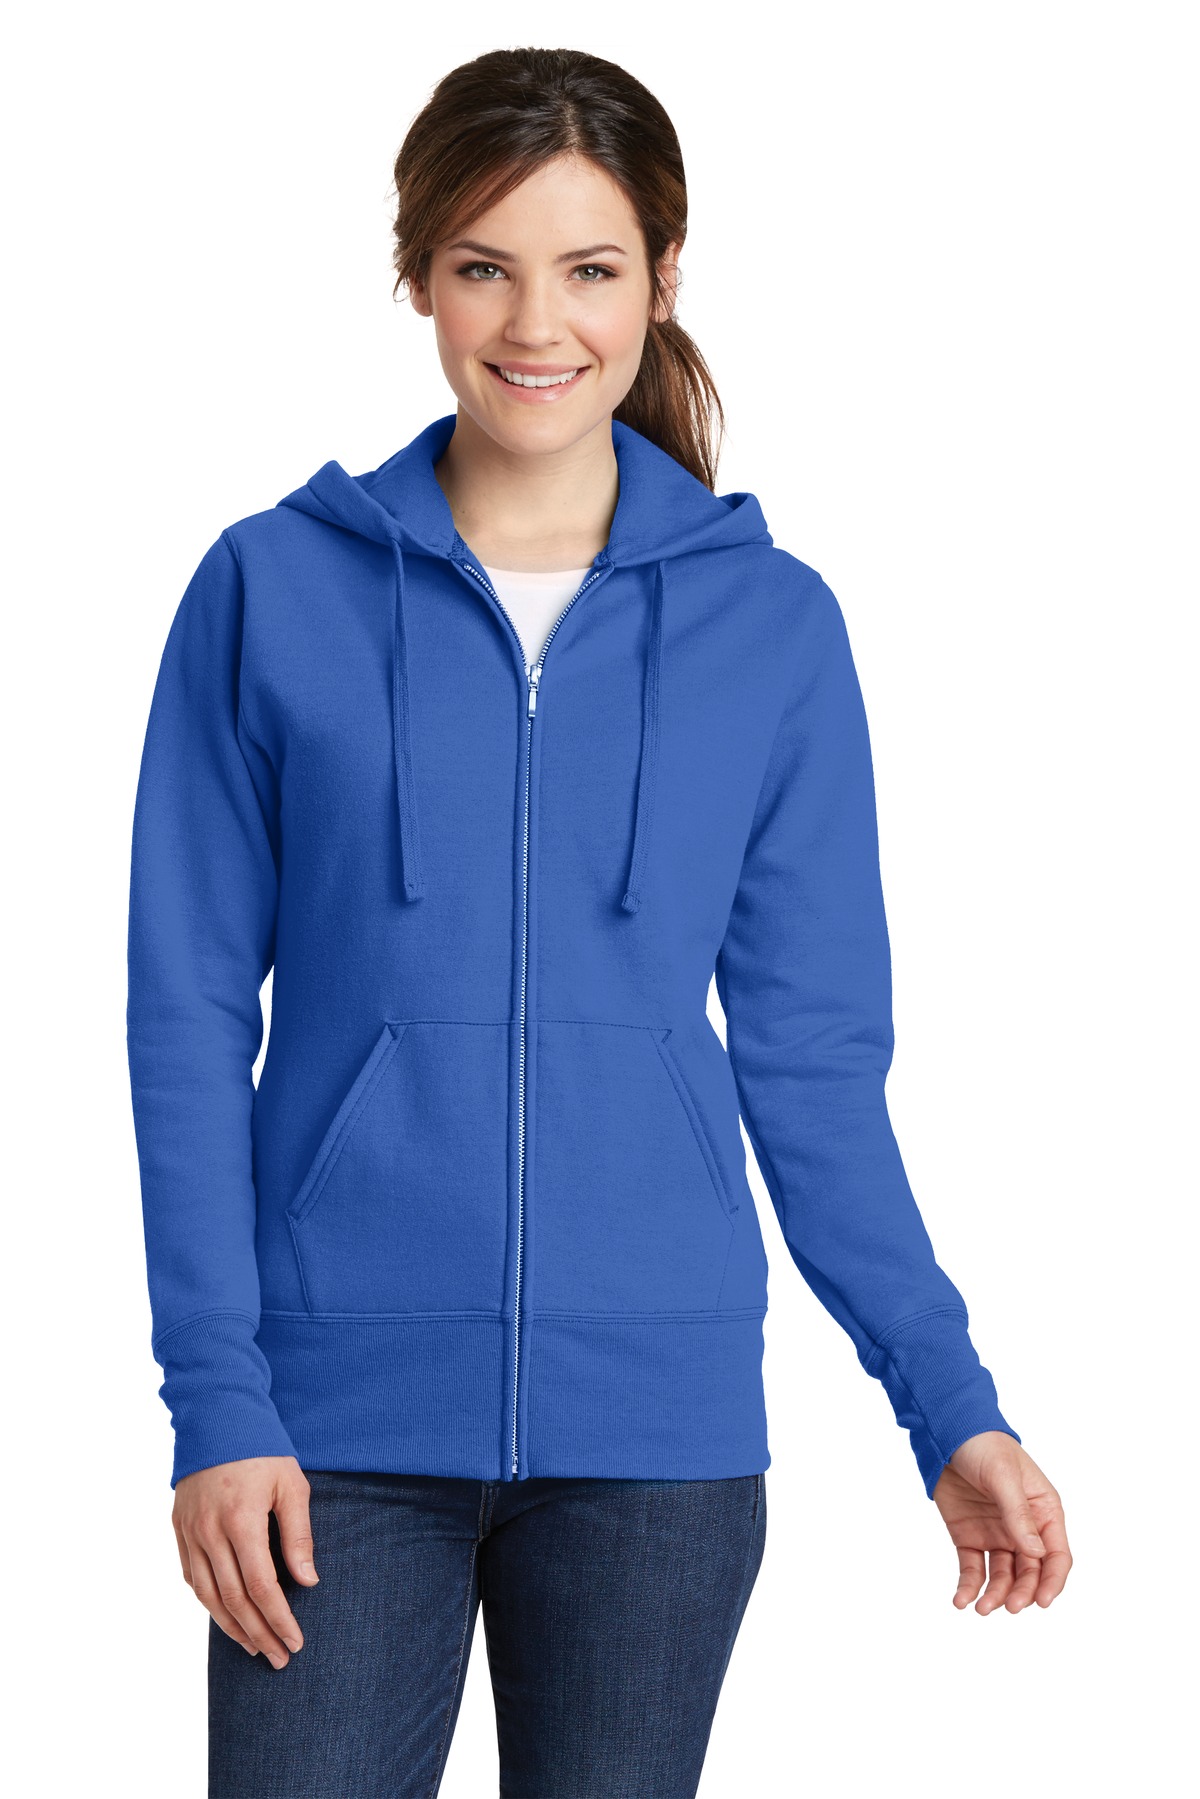 Port & Company Classic Full Zip Hooded Sweatshirt (LPC78ZH) Royal Blue, XL - image 1 of 2